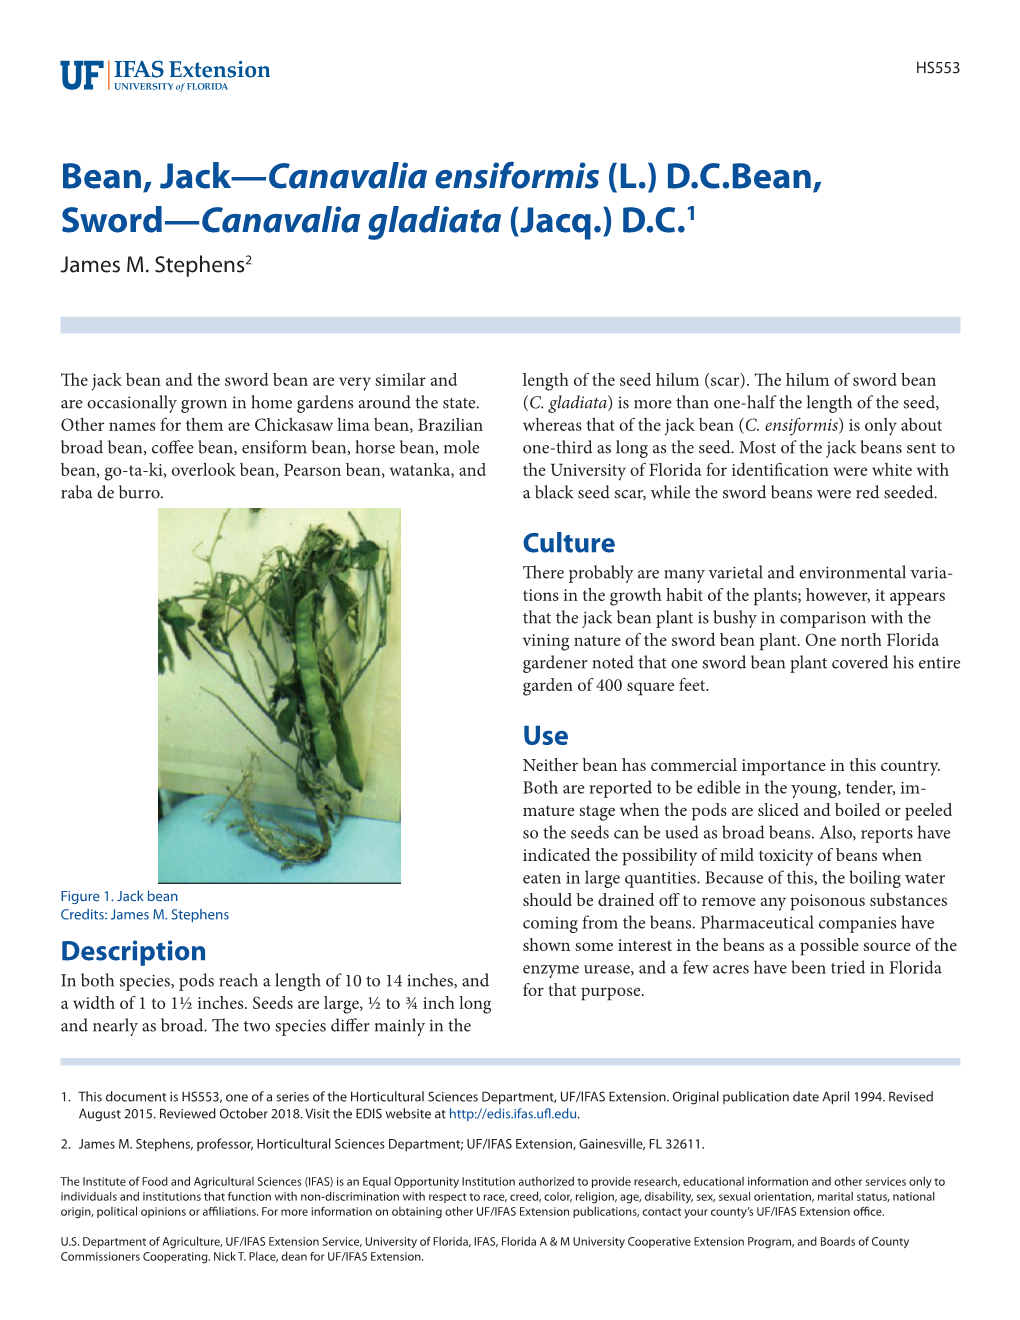 Bean, Jack—Canavalia Ensiformis (L.) D.C.Bean, Sword—Canavalia Gladiata (Jacq.) D.C.1 James M